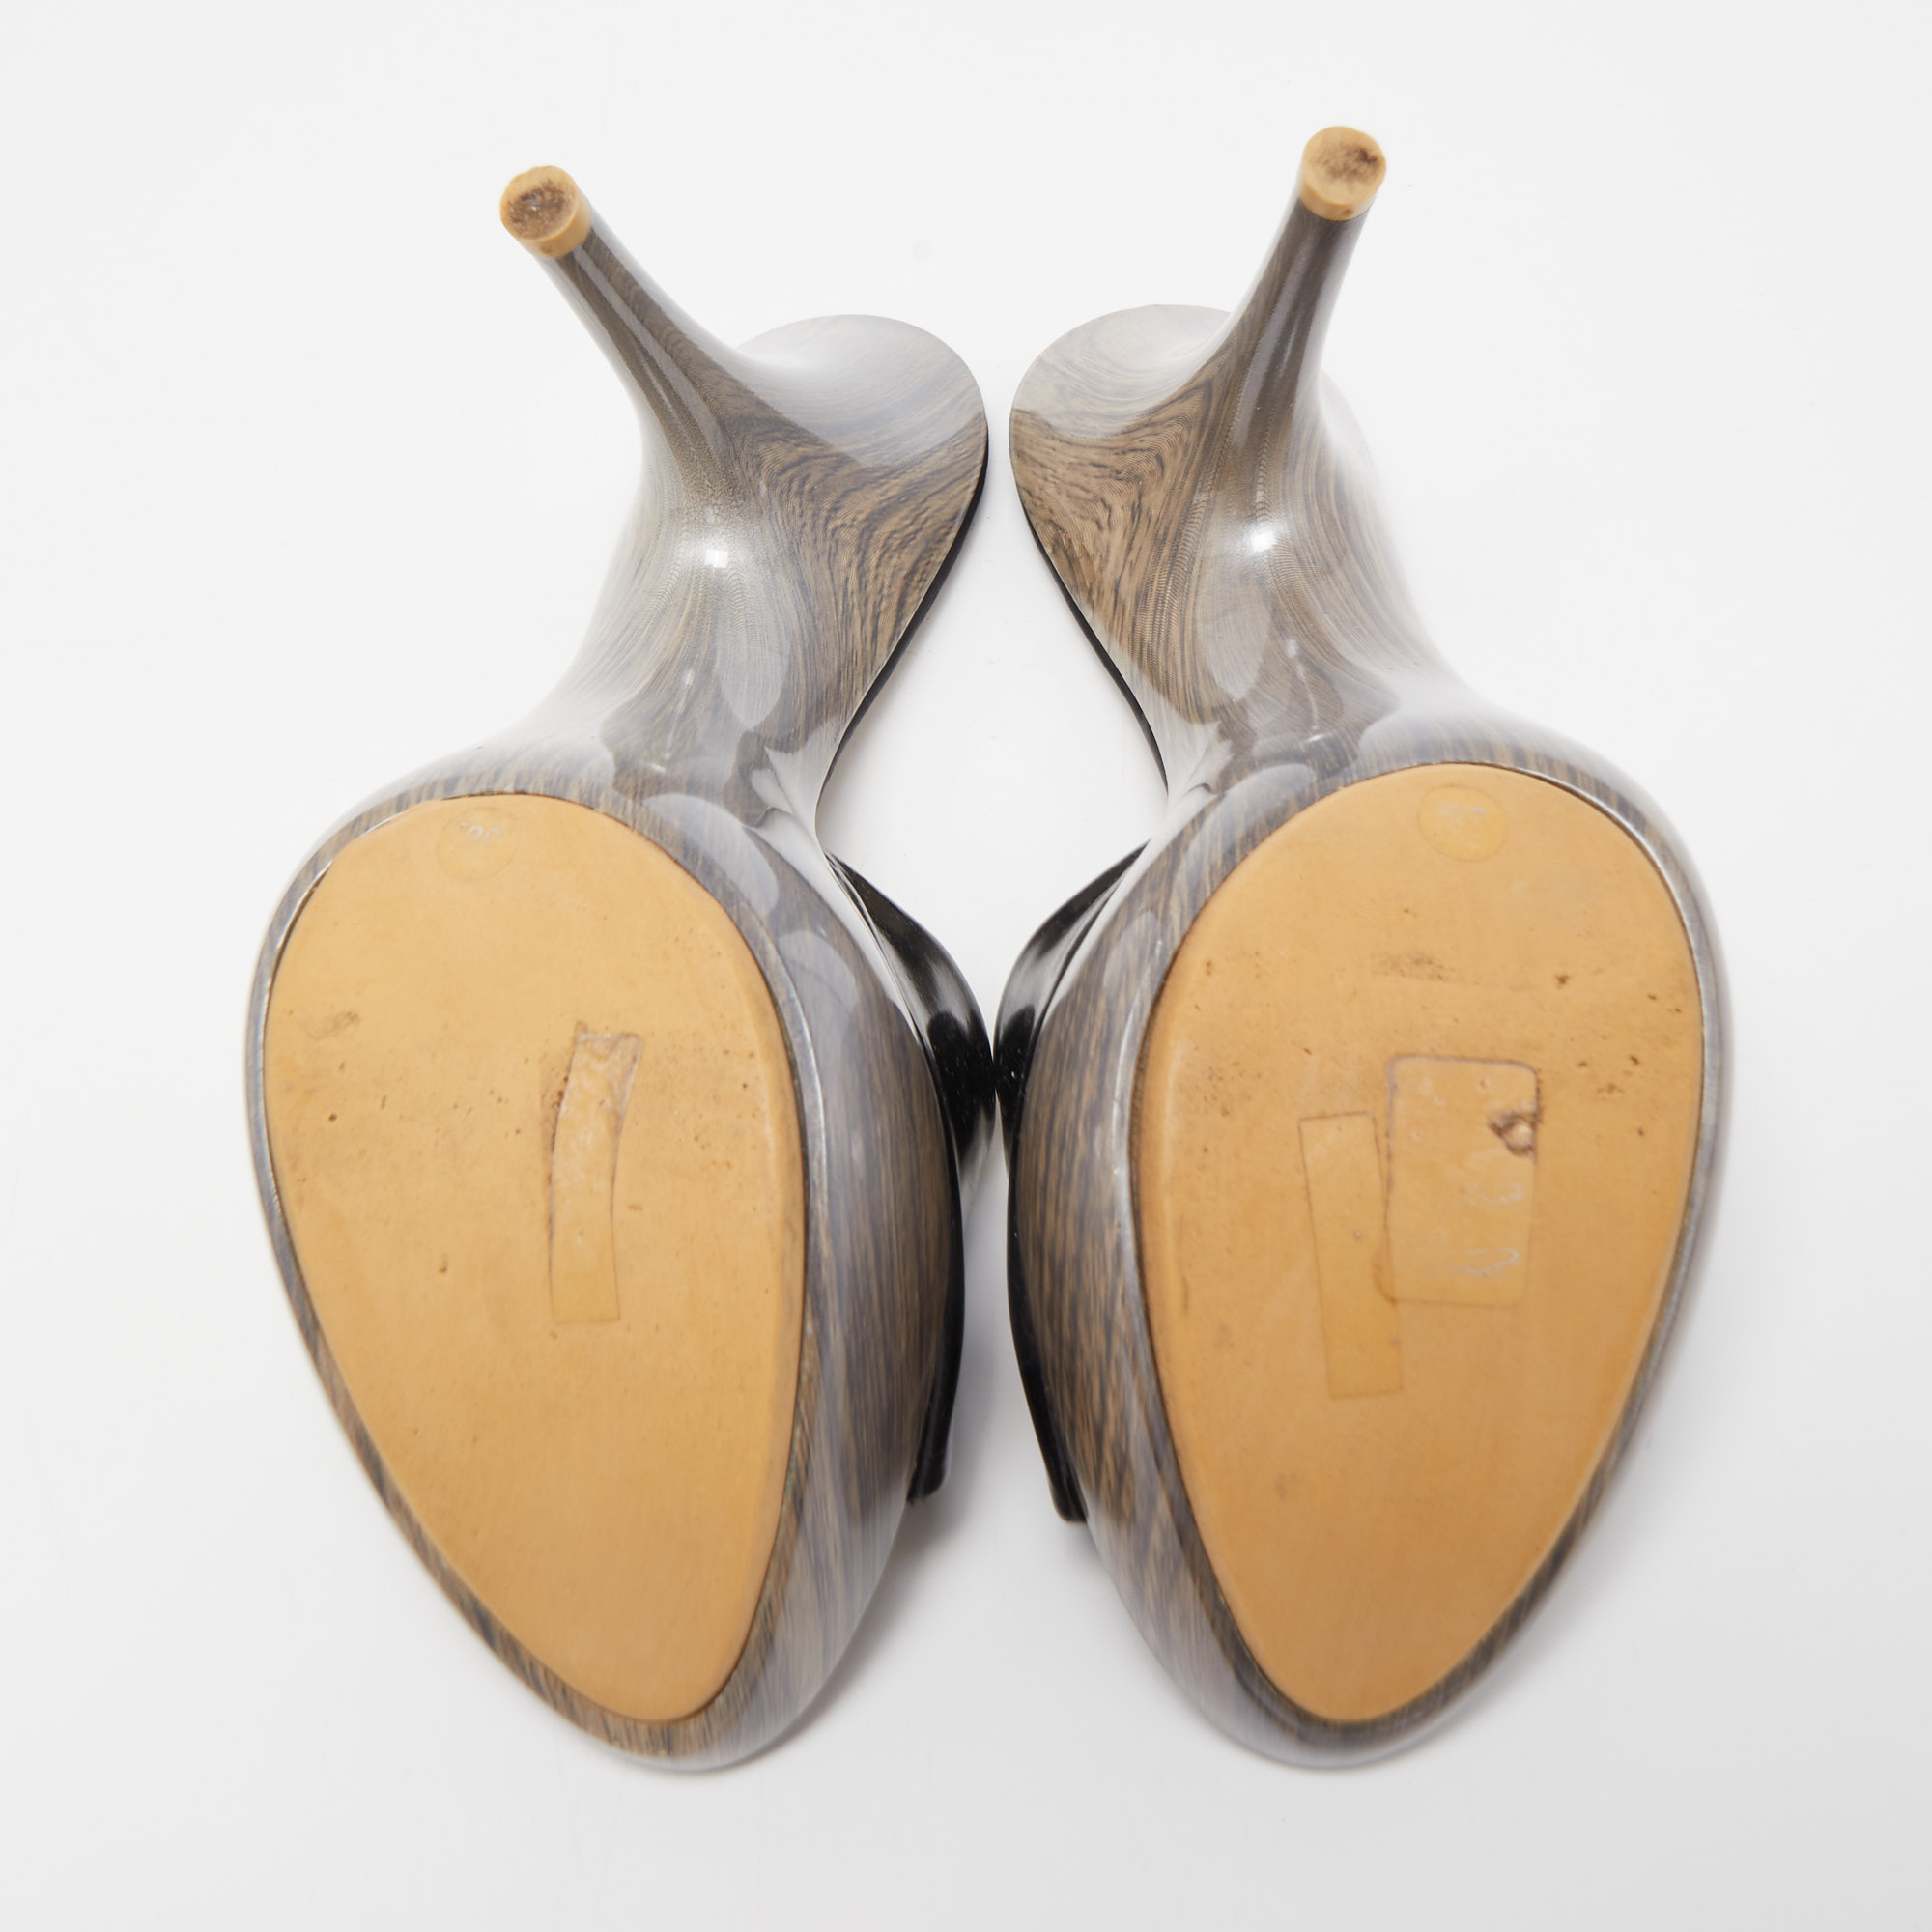 Roberto Cavalli Black Patent Leather Open Toe Platform Slide Sandals Size 38.5